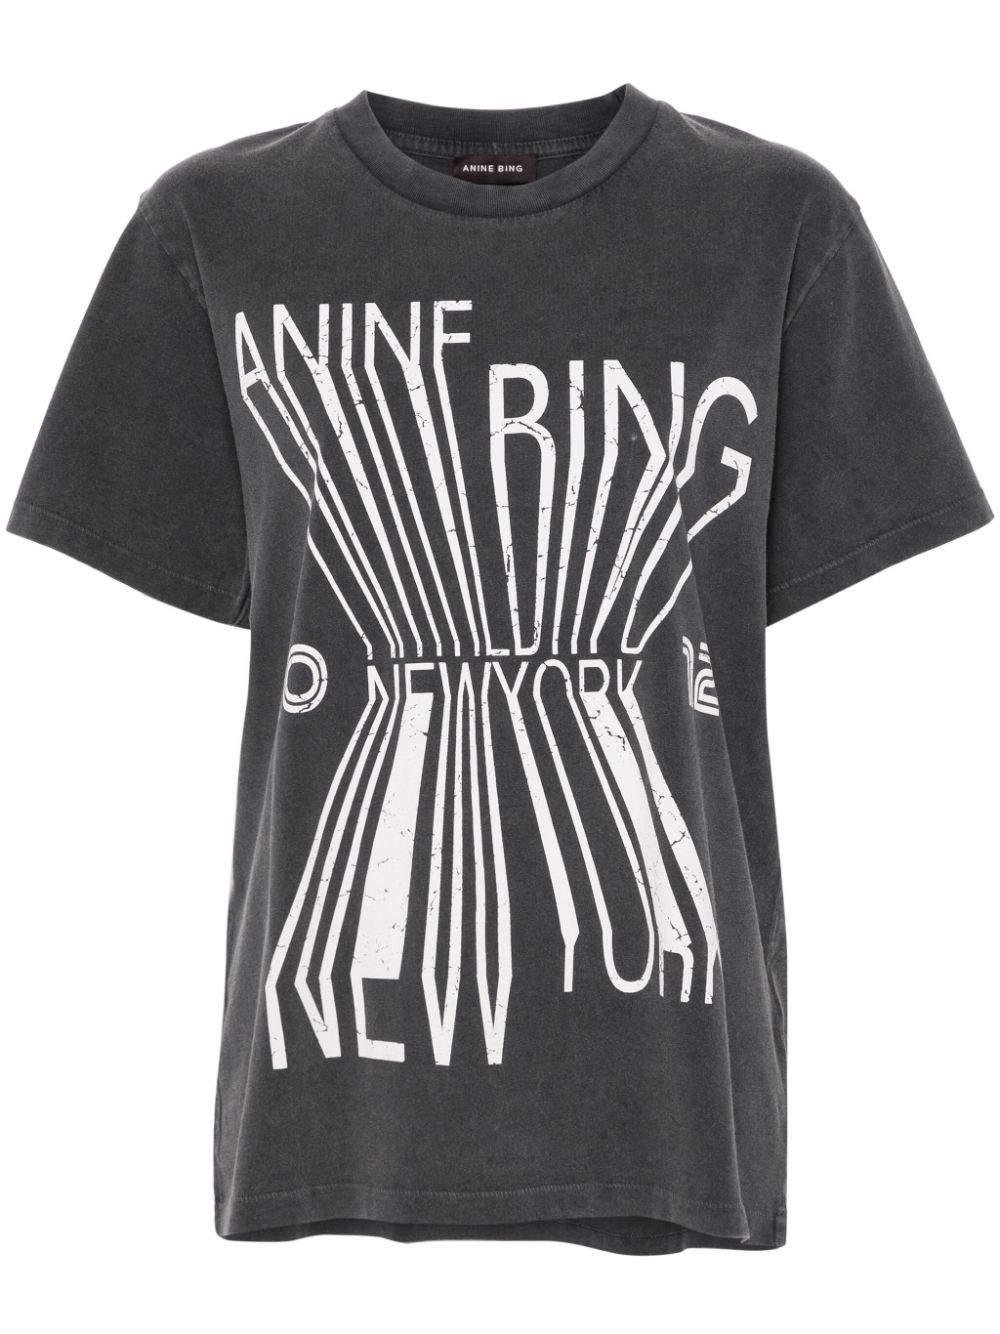 ANINE BING Colby Bing New York T-Shirt - Grau von ANINE BING